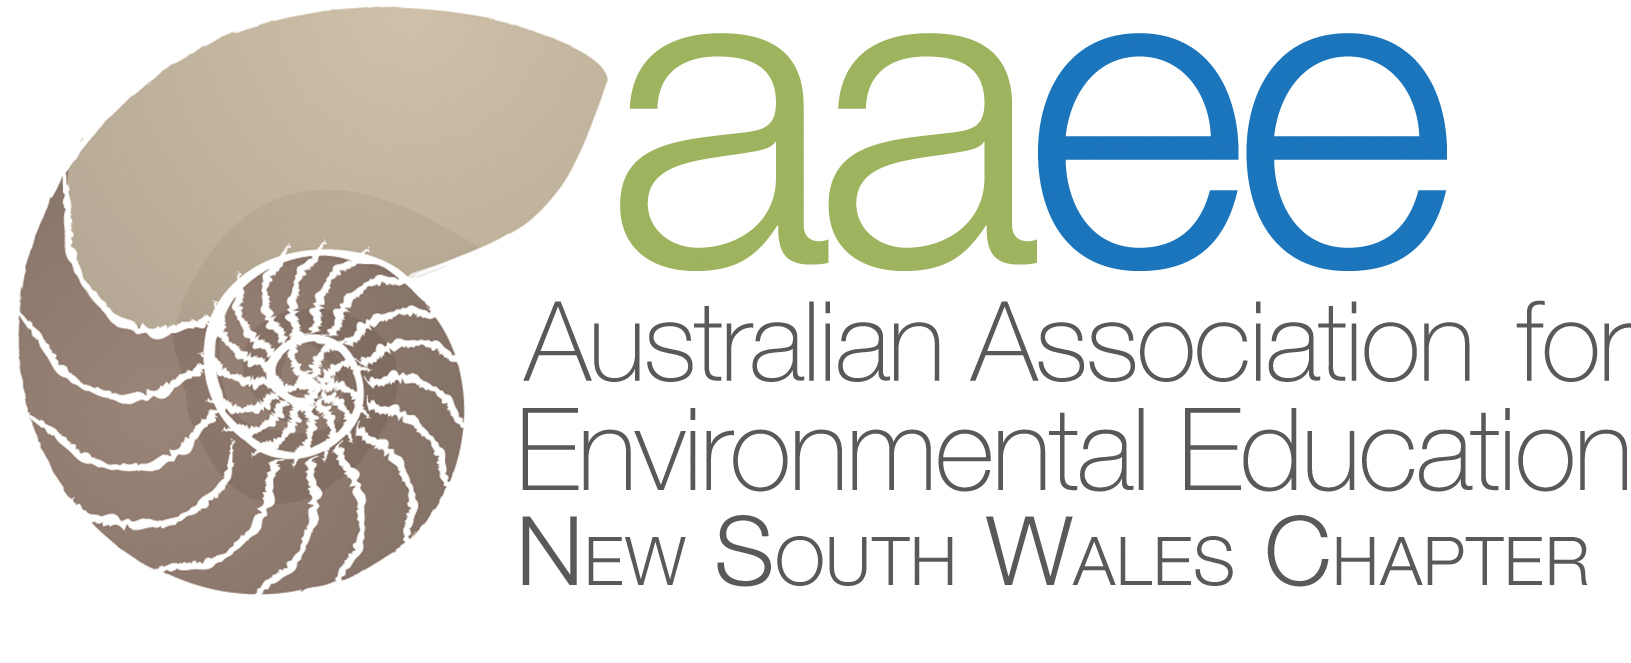 NSW Australian Association for Environmental Education